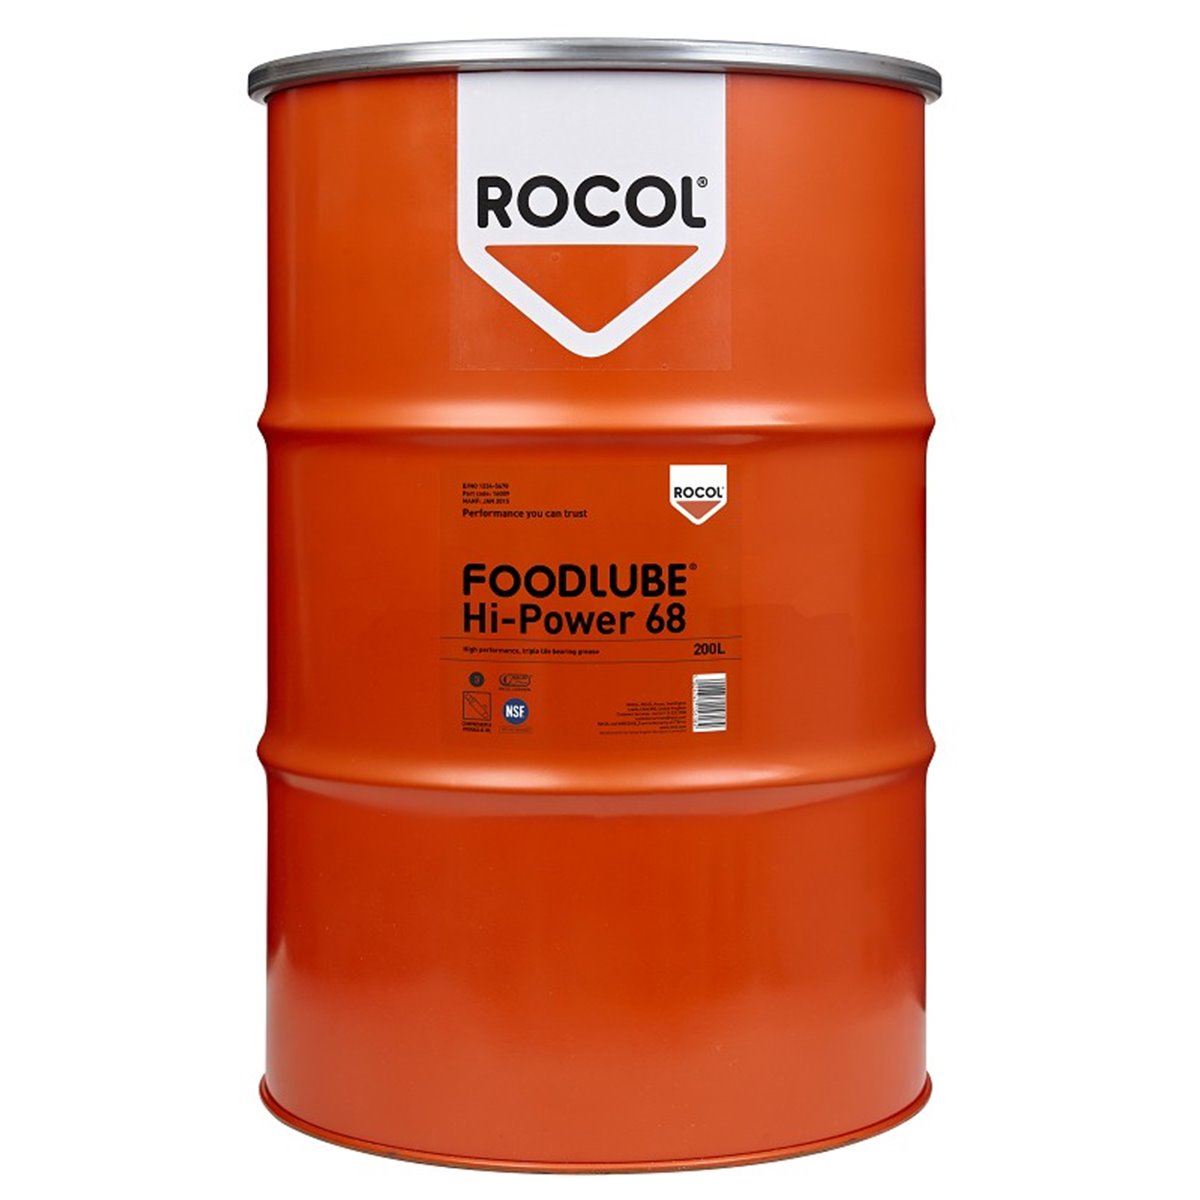 FOODLUBE Hi-Power 68 Rocol 200l RS16009